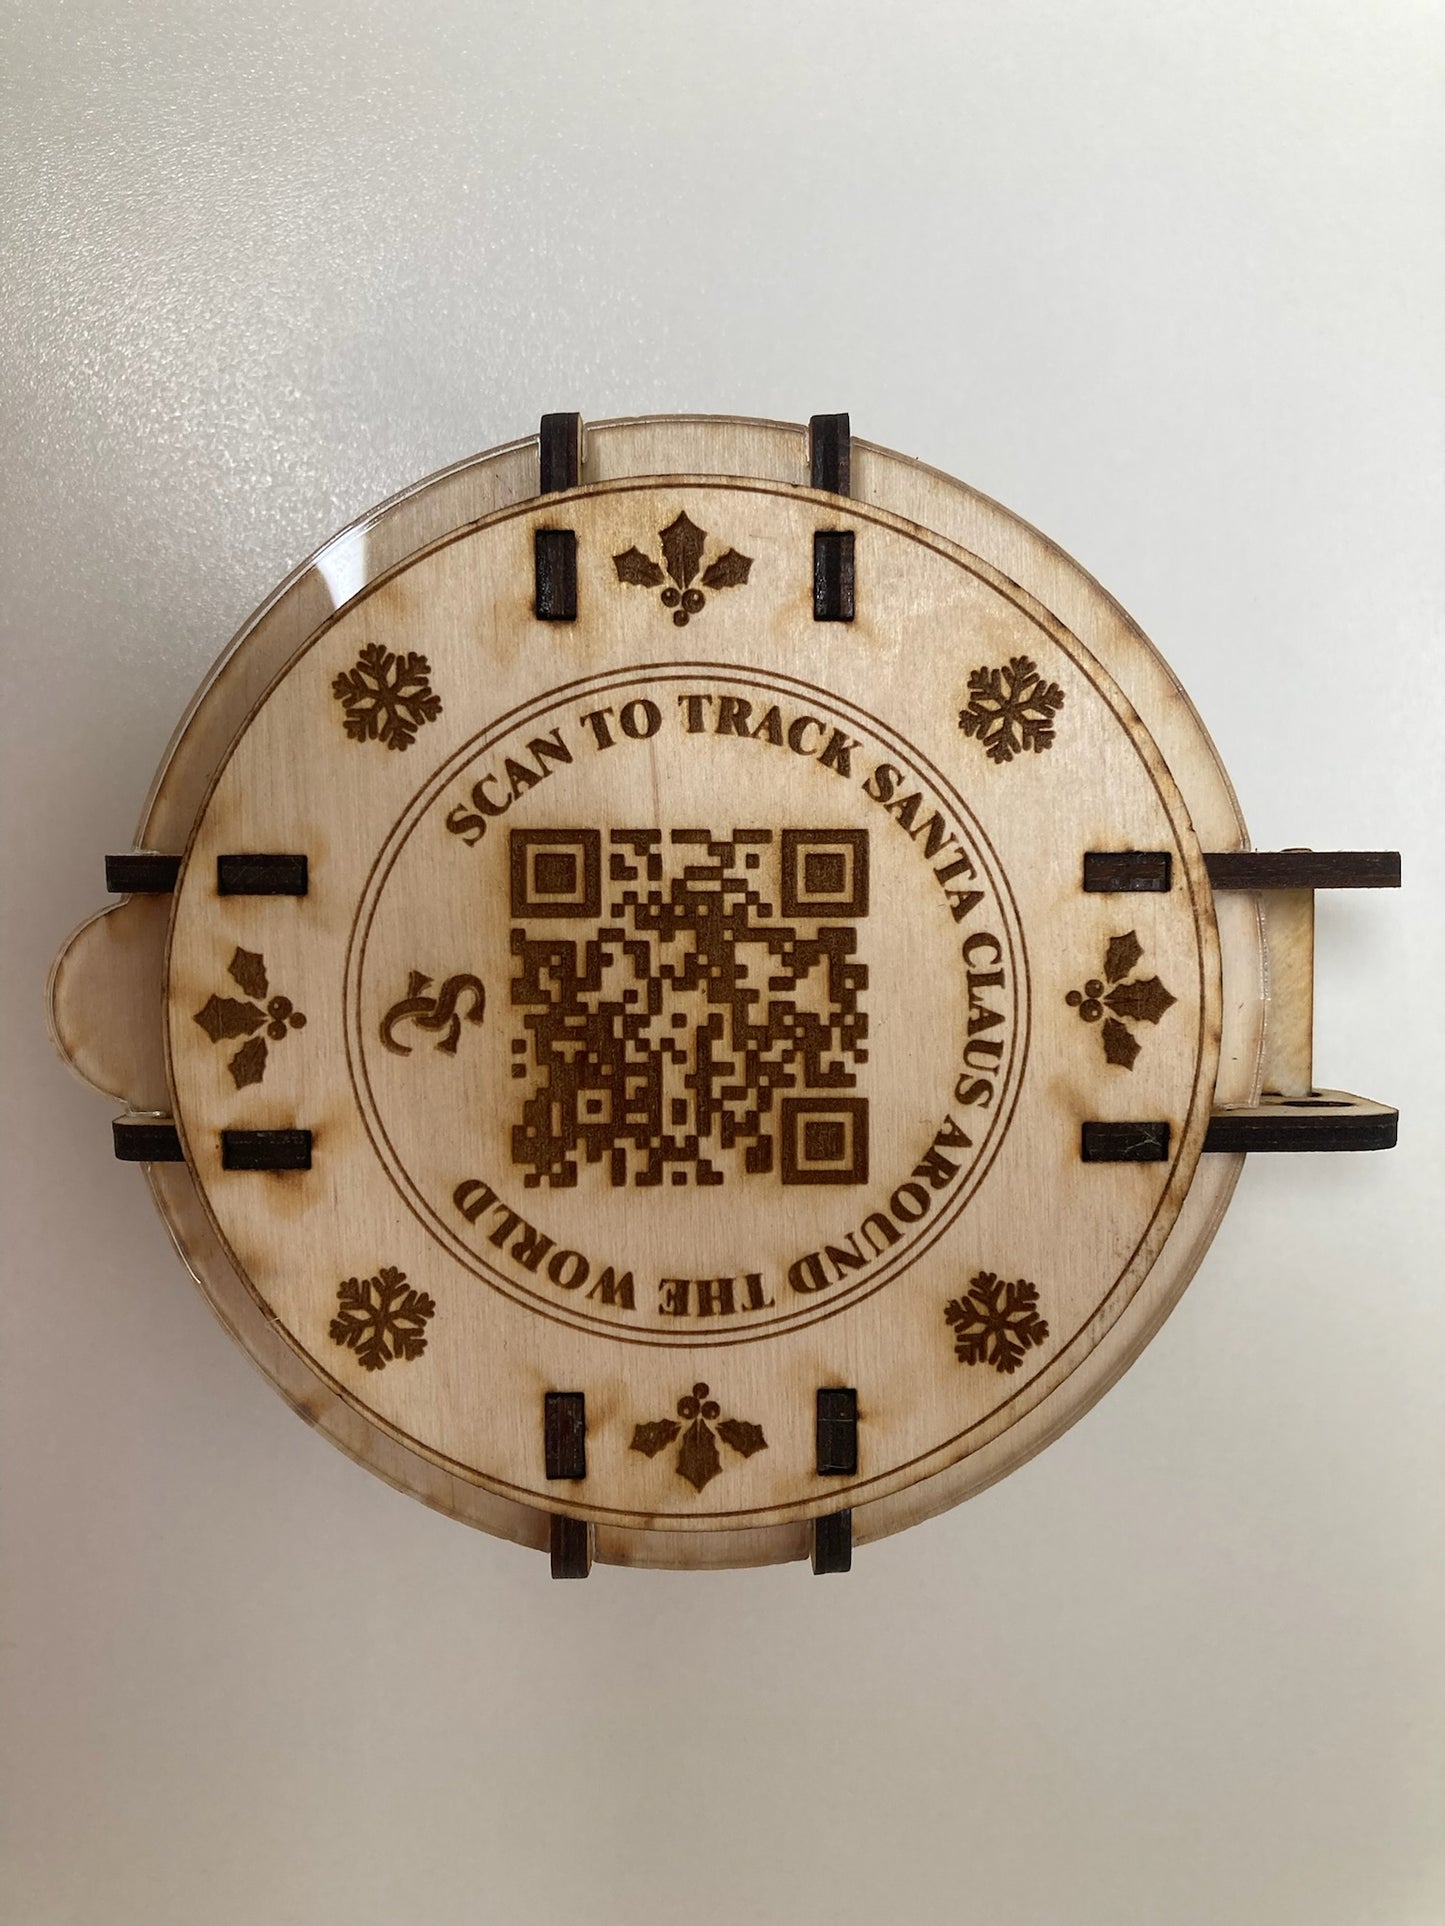 Santa’s Compass with QR Code to “track” Santa